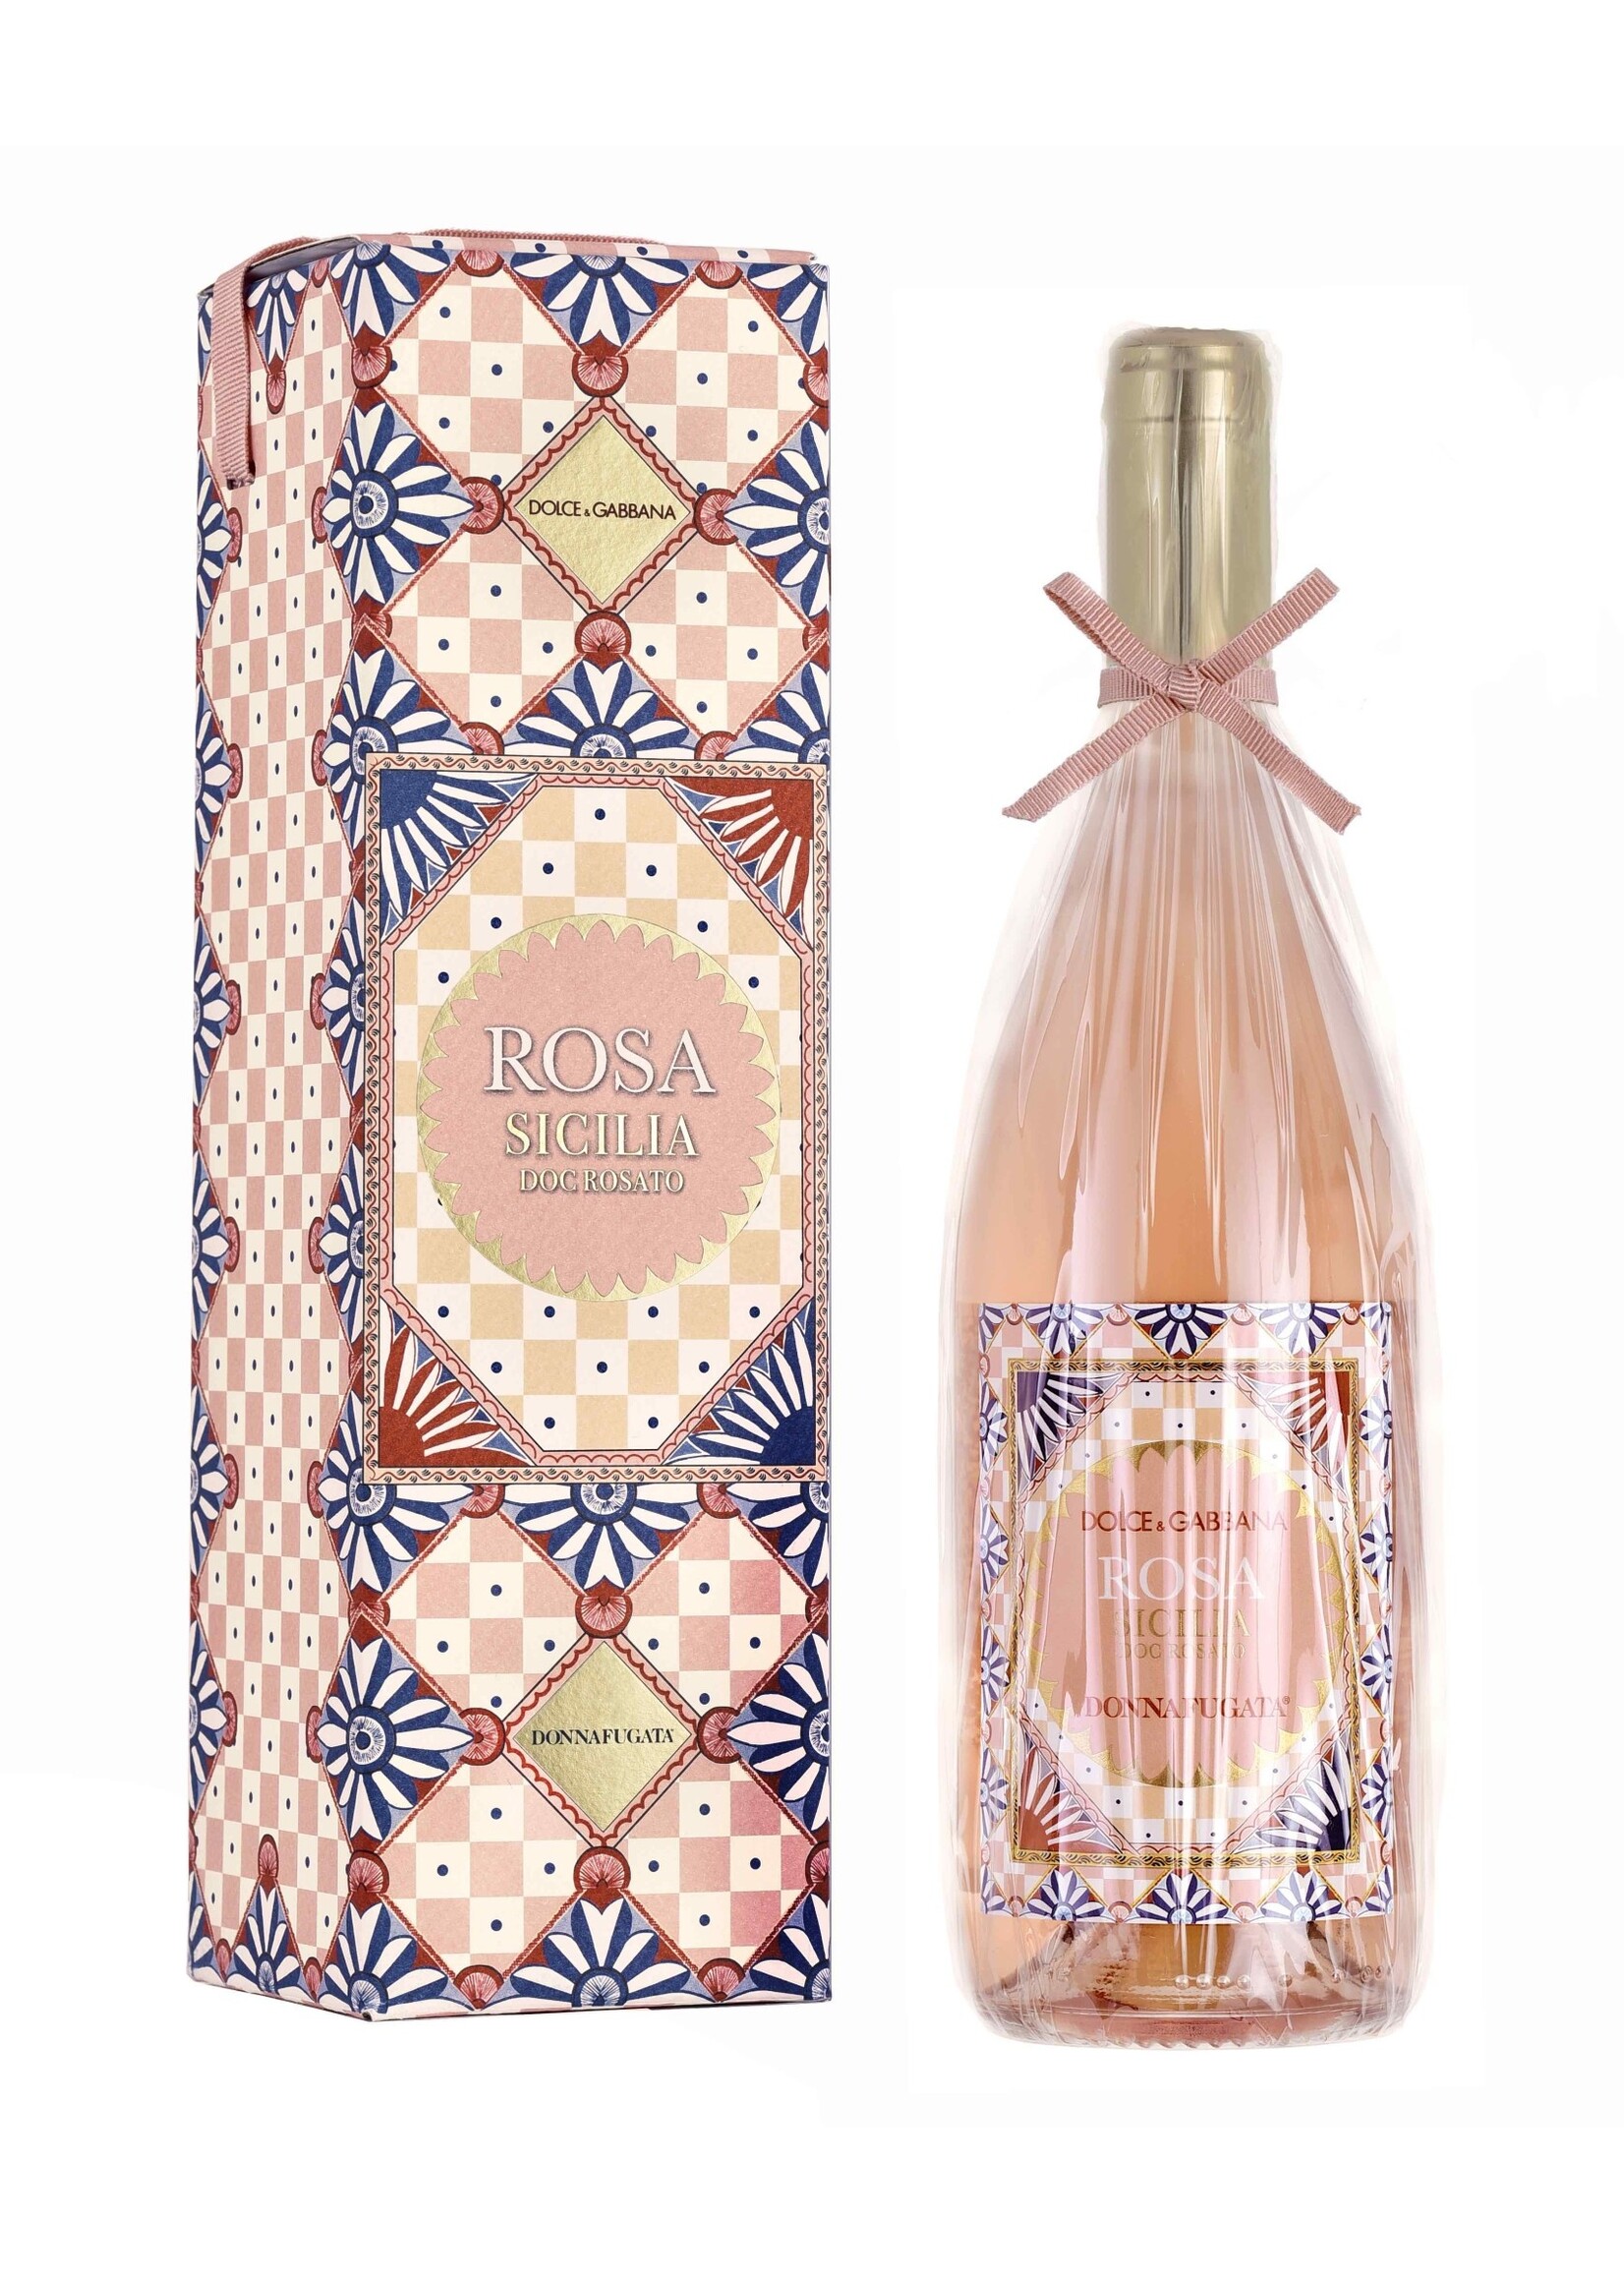 Donnafugata Donnafugata and Dolce & Gabbana Rosa 2021 - Rose wine with Gift Box